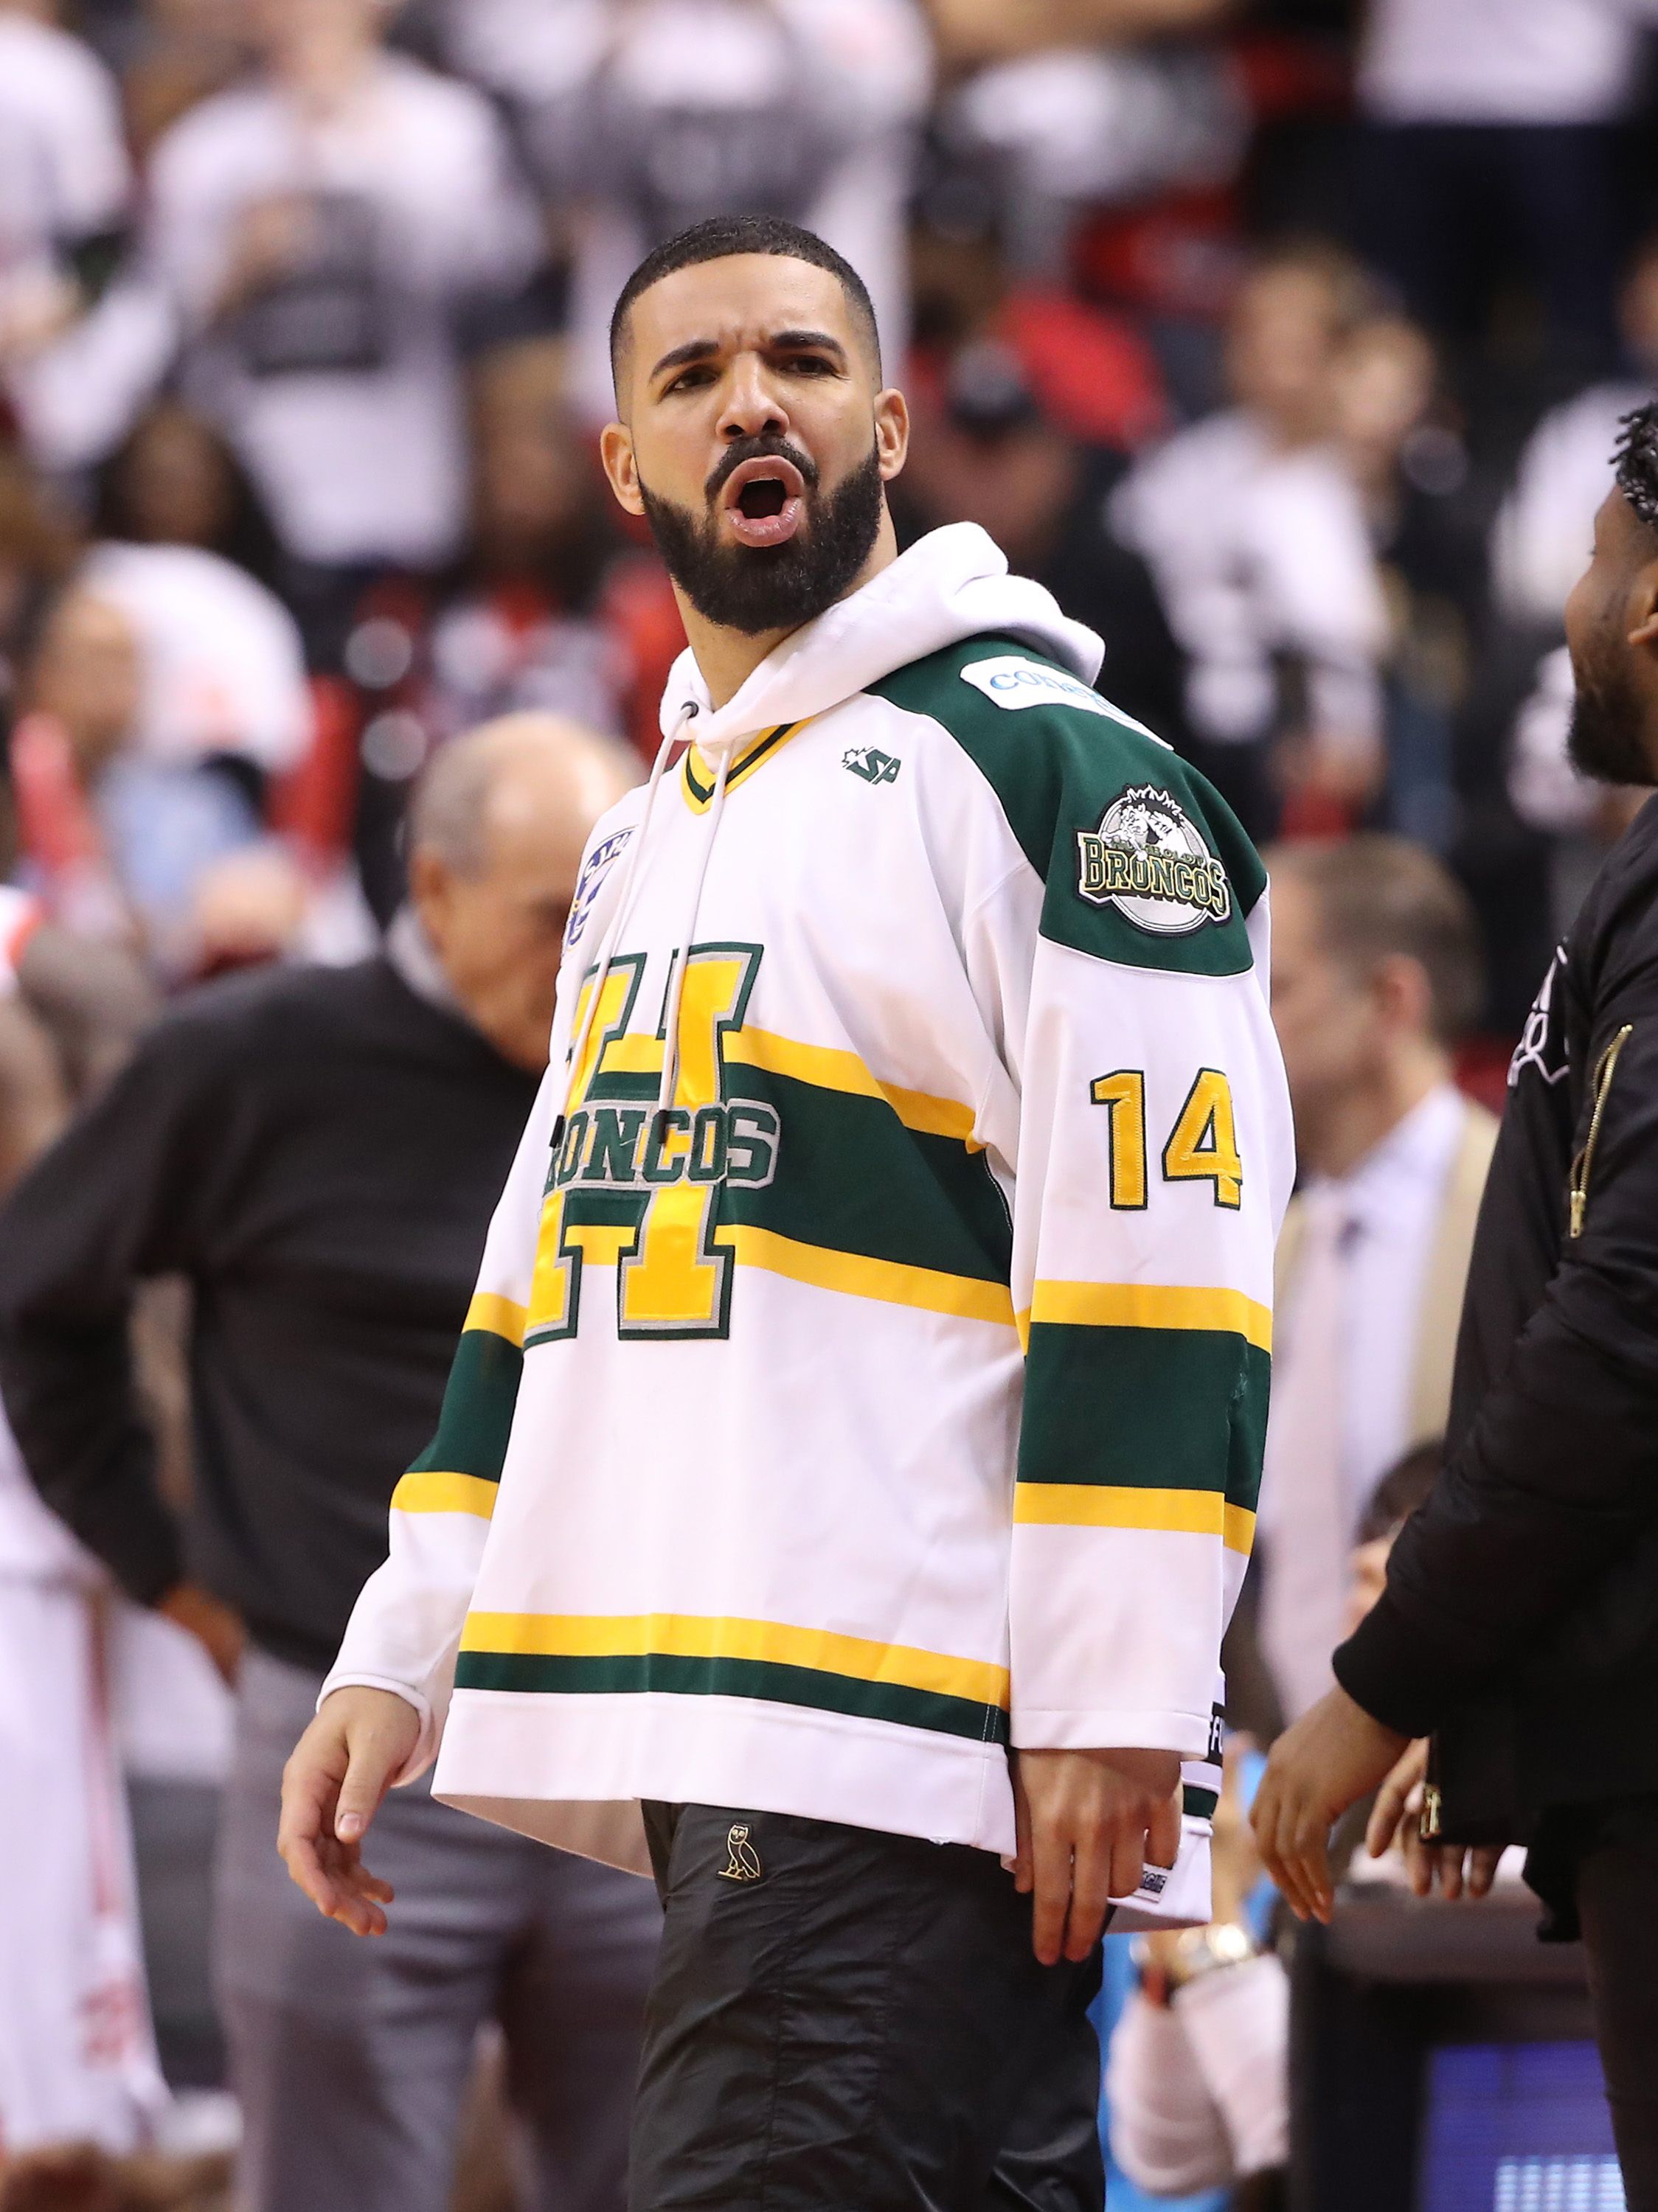 Toronto Raptors warned by NBA over Drake behaviour